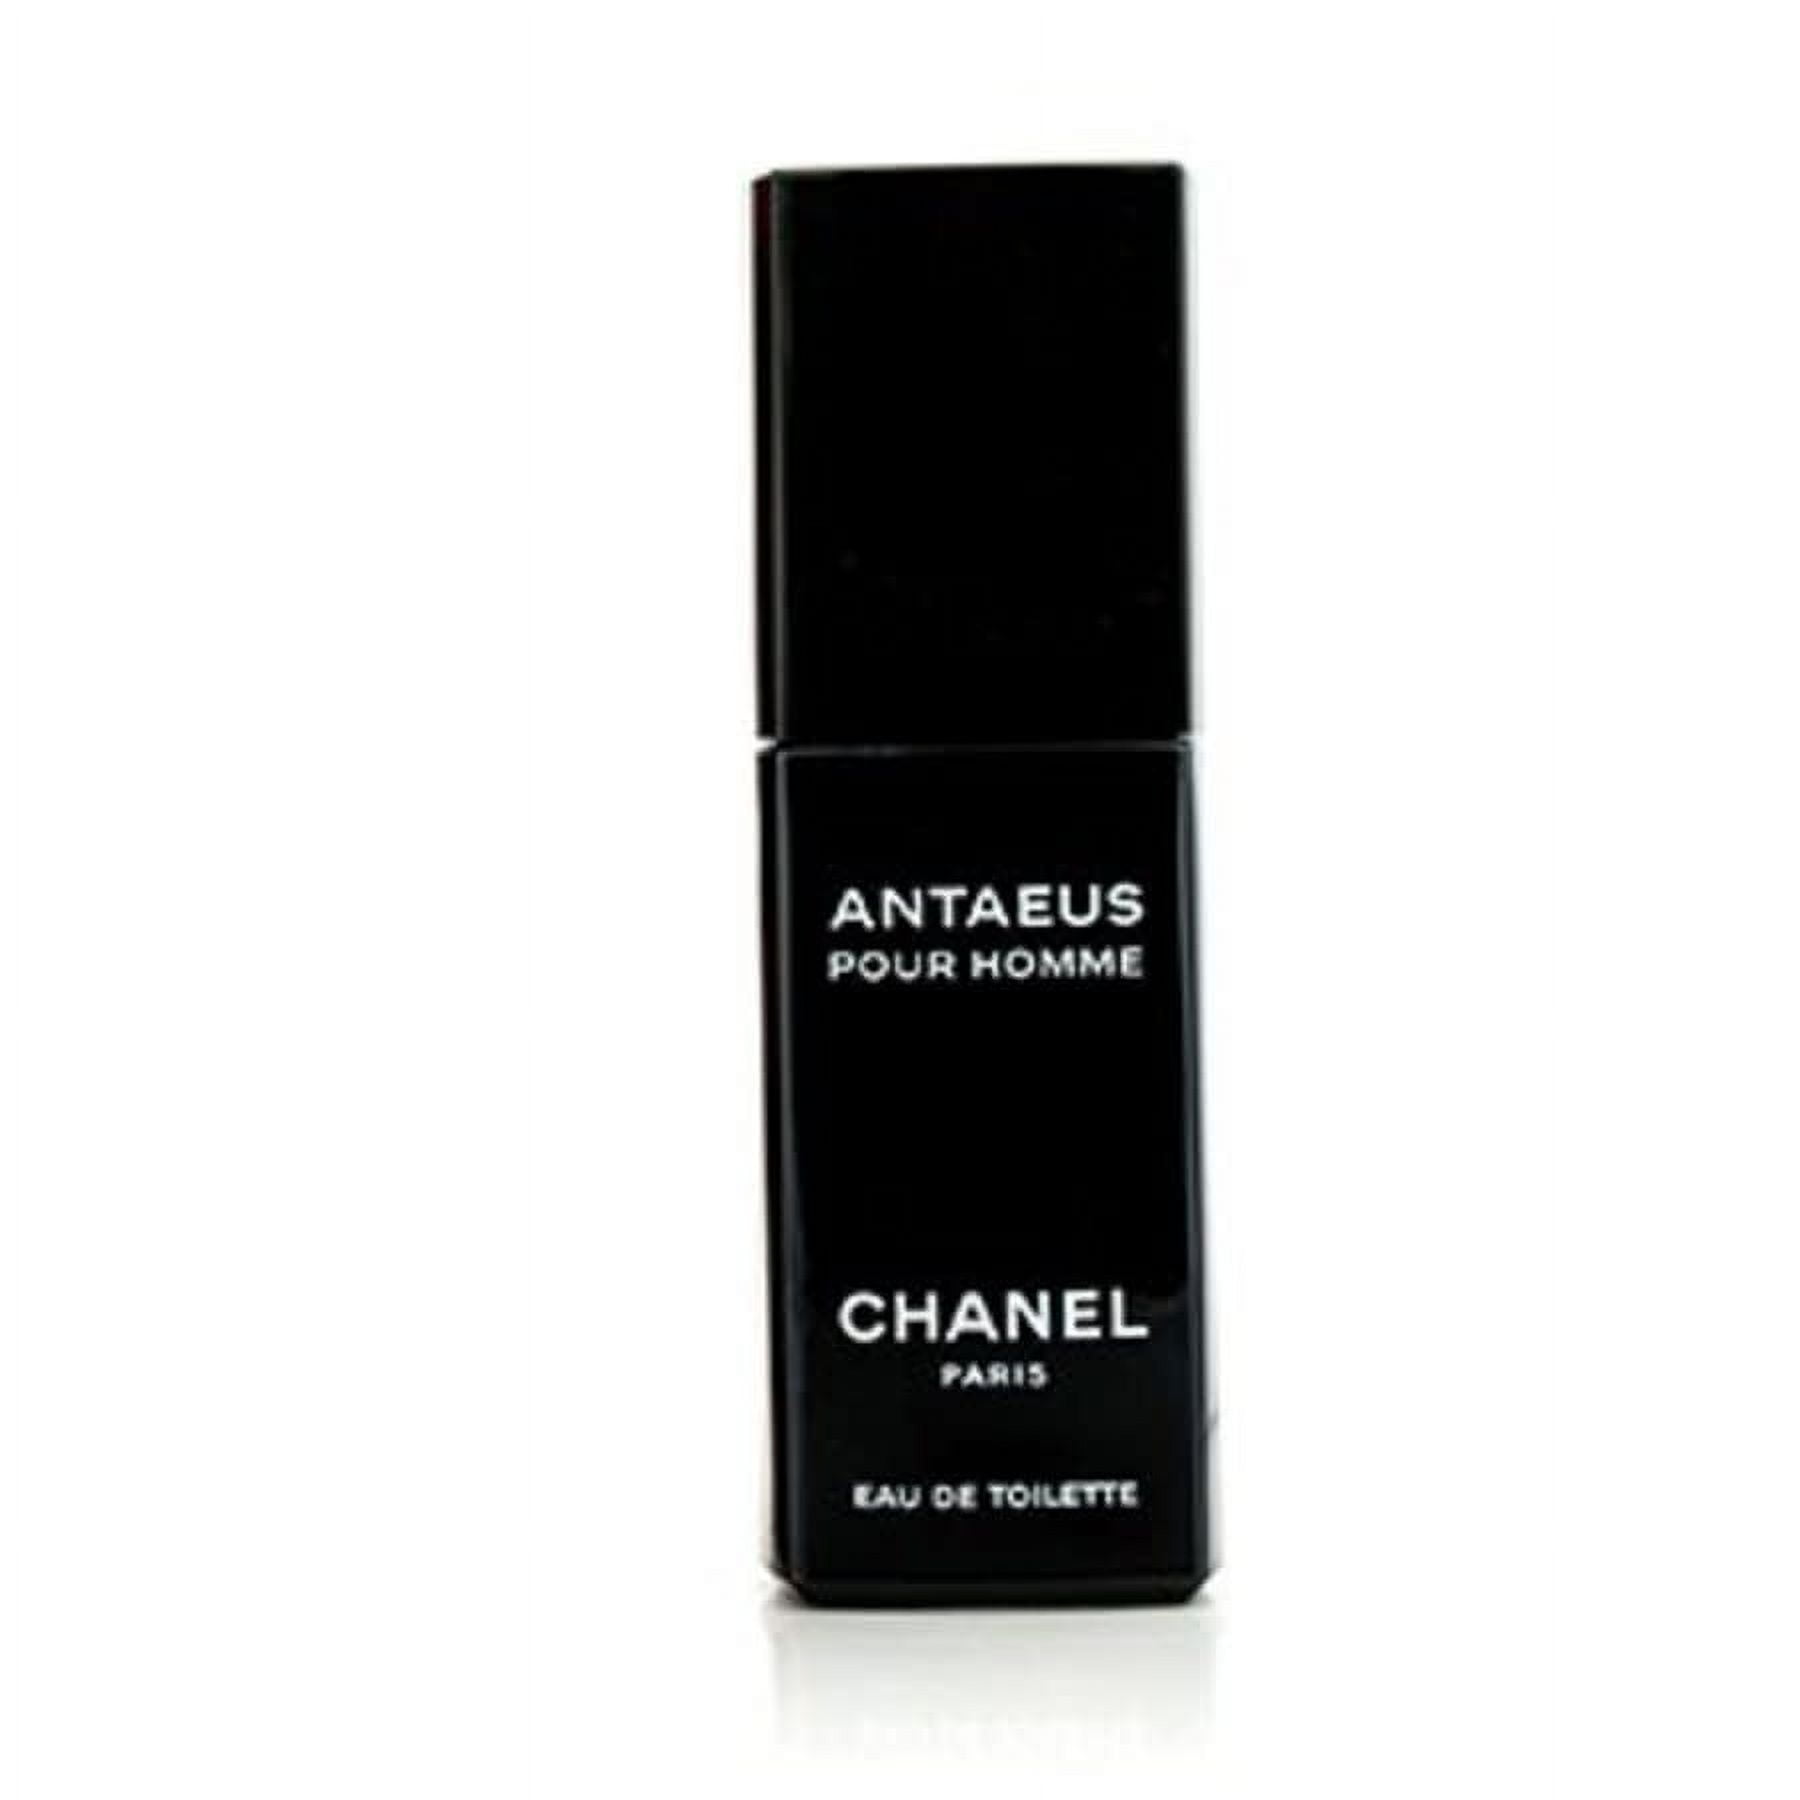 ANTAEUS by Chanel Eau De Toilette Spray 3.4 oz 